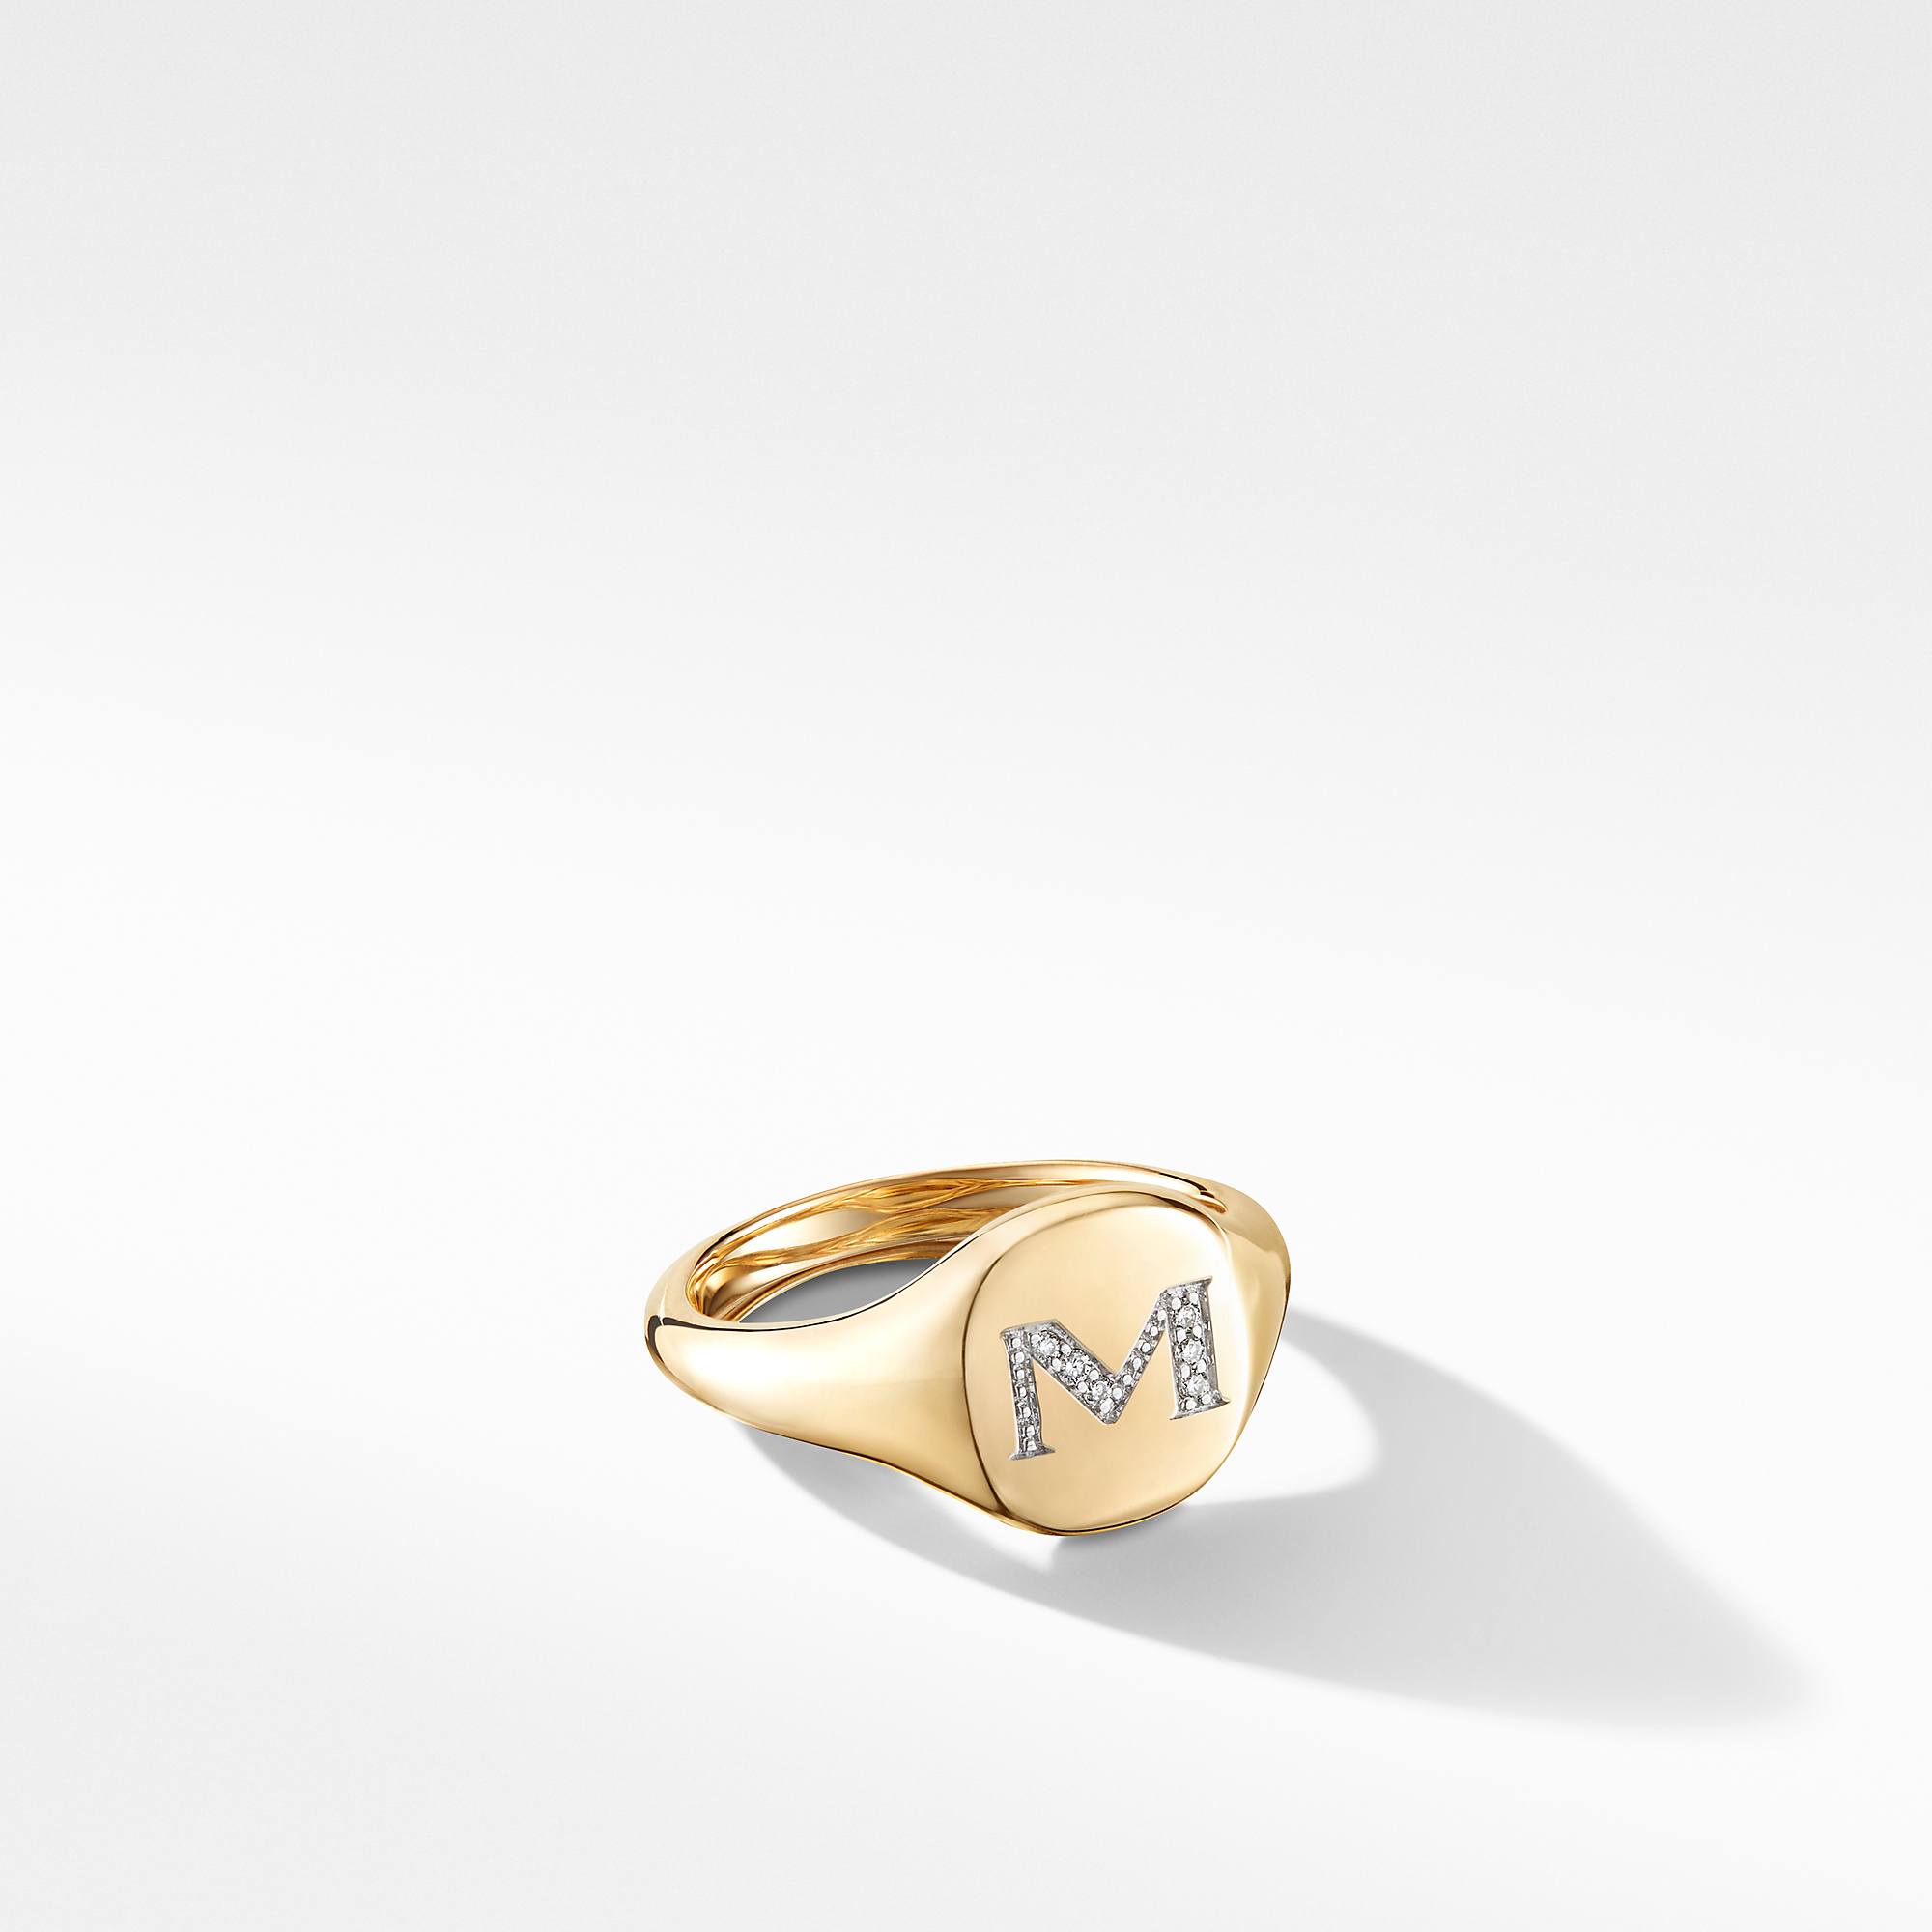 David Yurman Mini DY "M" initial Pinky Ring in 18K Yellow Gold with Diamonds, size 4 0